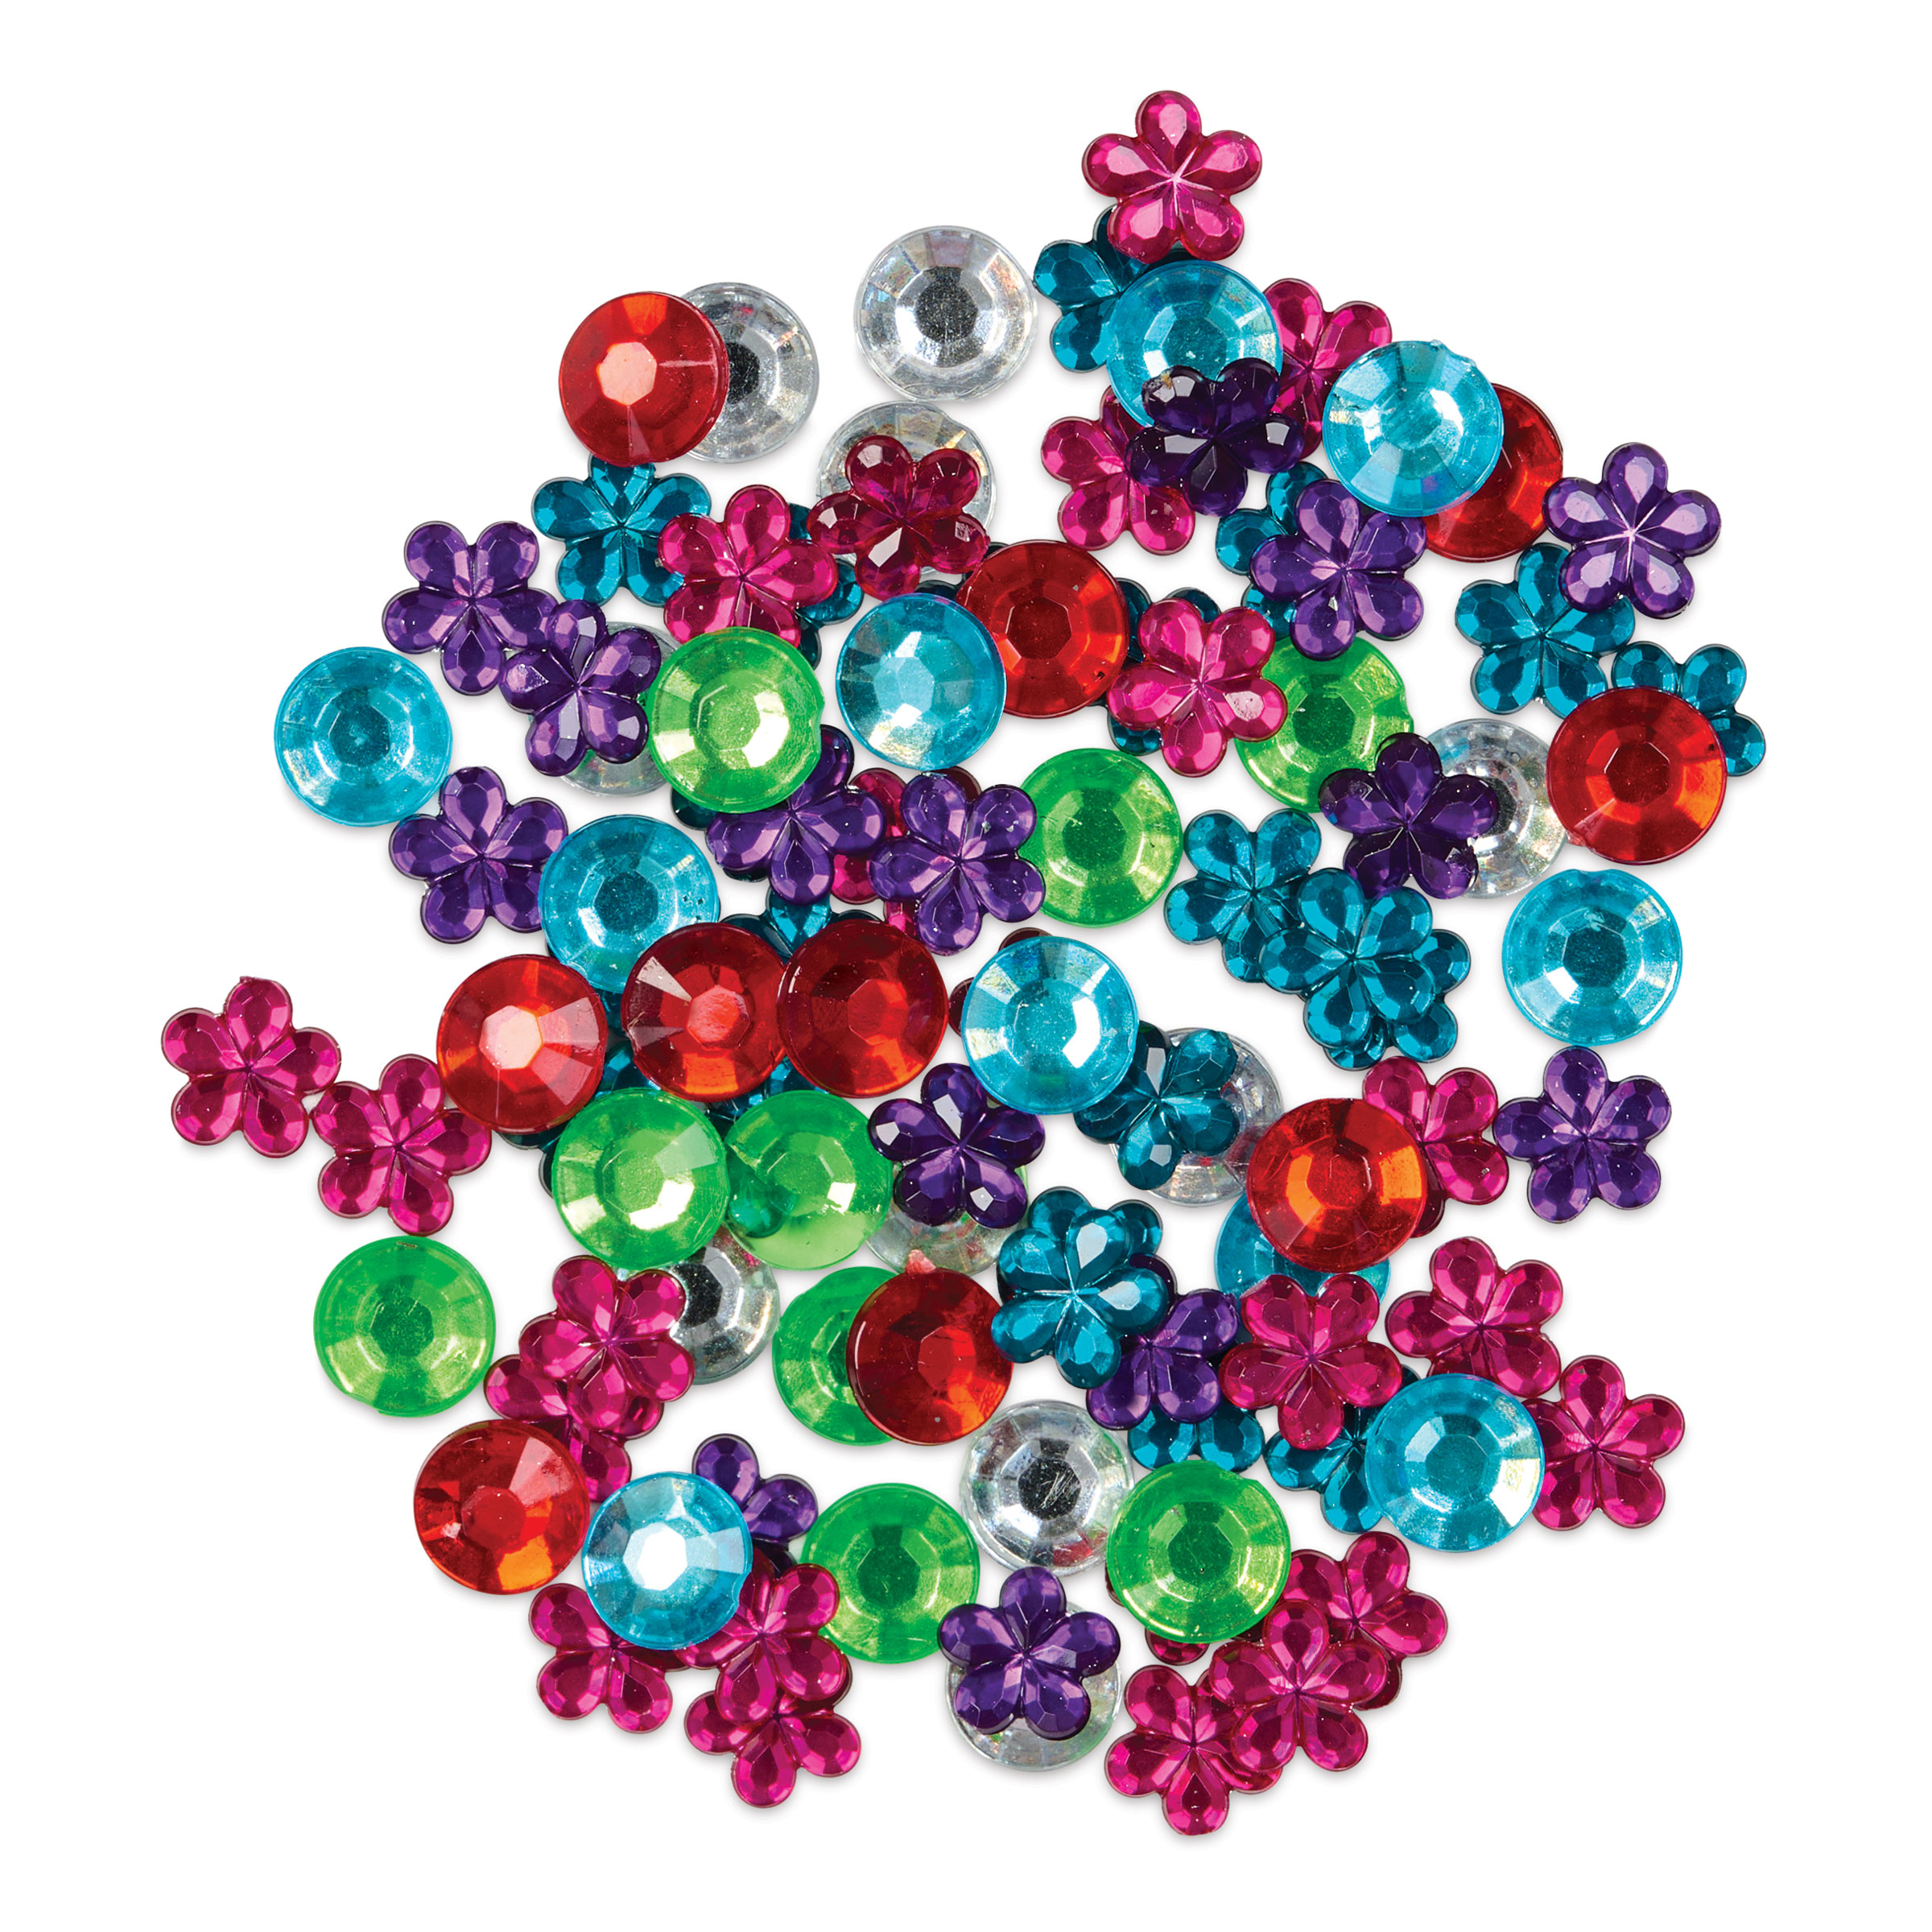 KraftGenius Crystal Gems for Crafts Over 700 Pieces